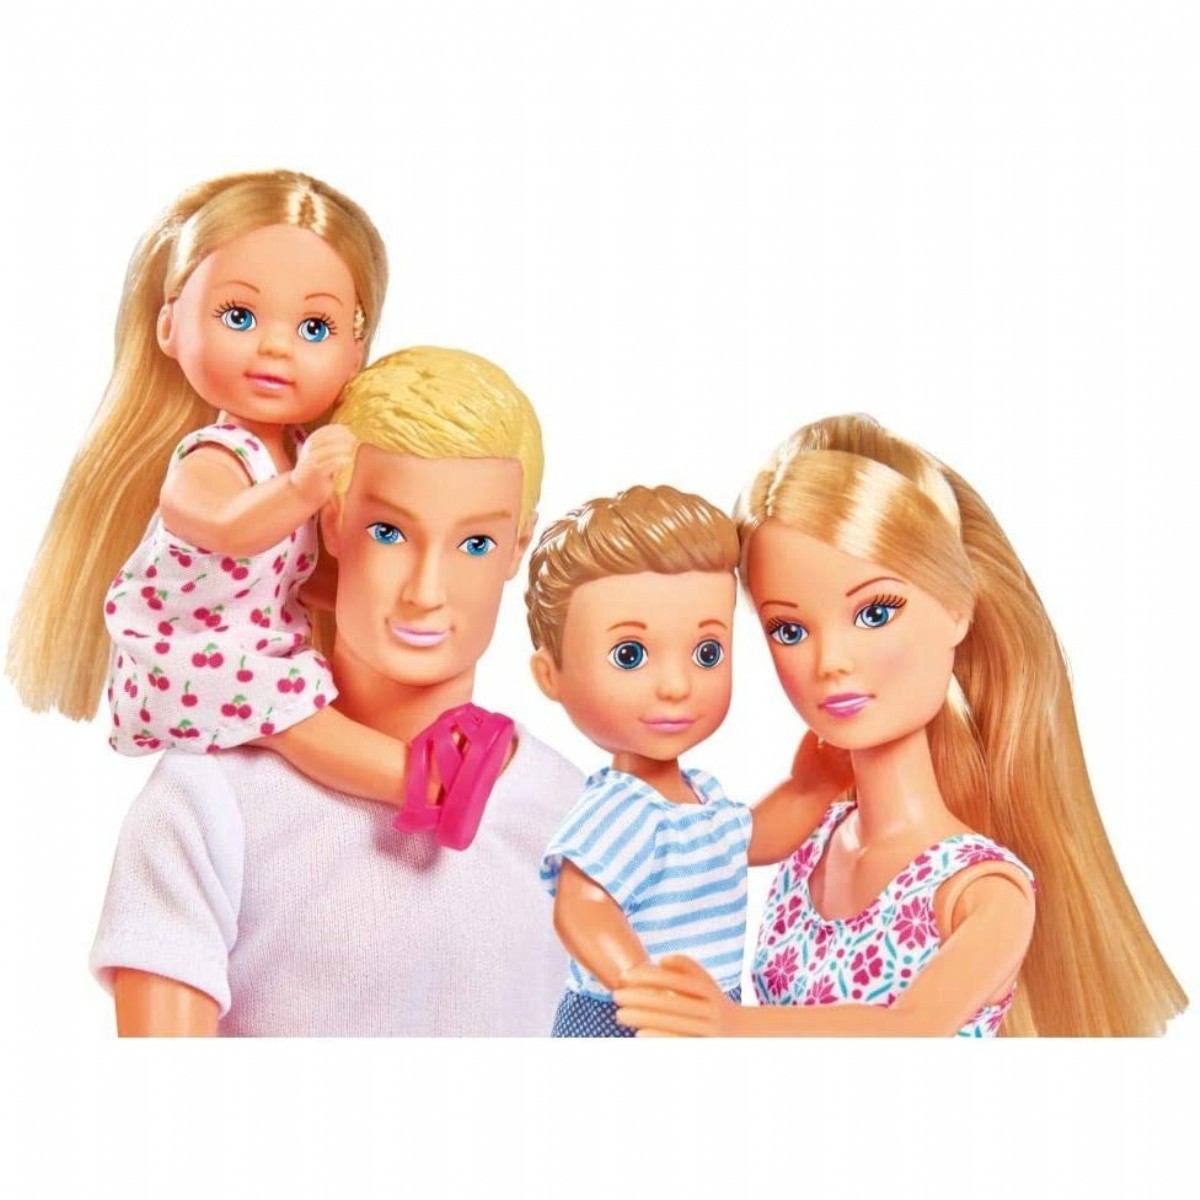 2 4 фэмили. Кукла Steffi семья Штеффи. Штеффи Кевин Еви Тимми Королевская семья куклы. А4 Фэмили. XL Barbie.